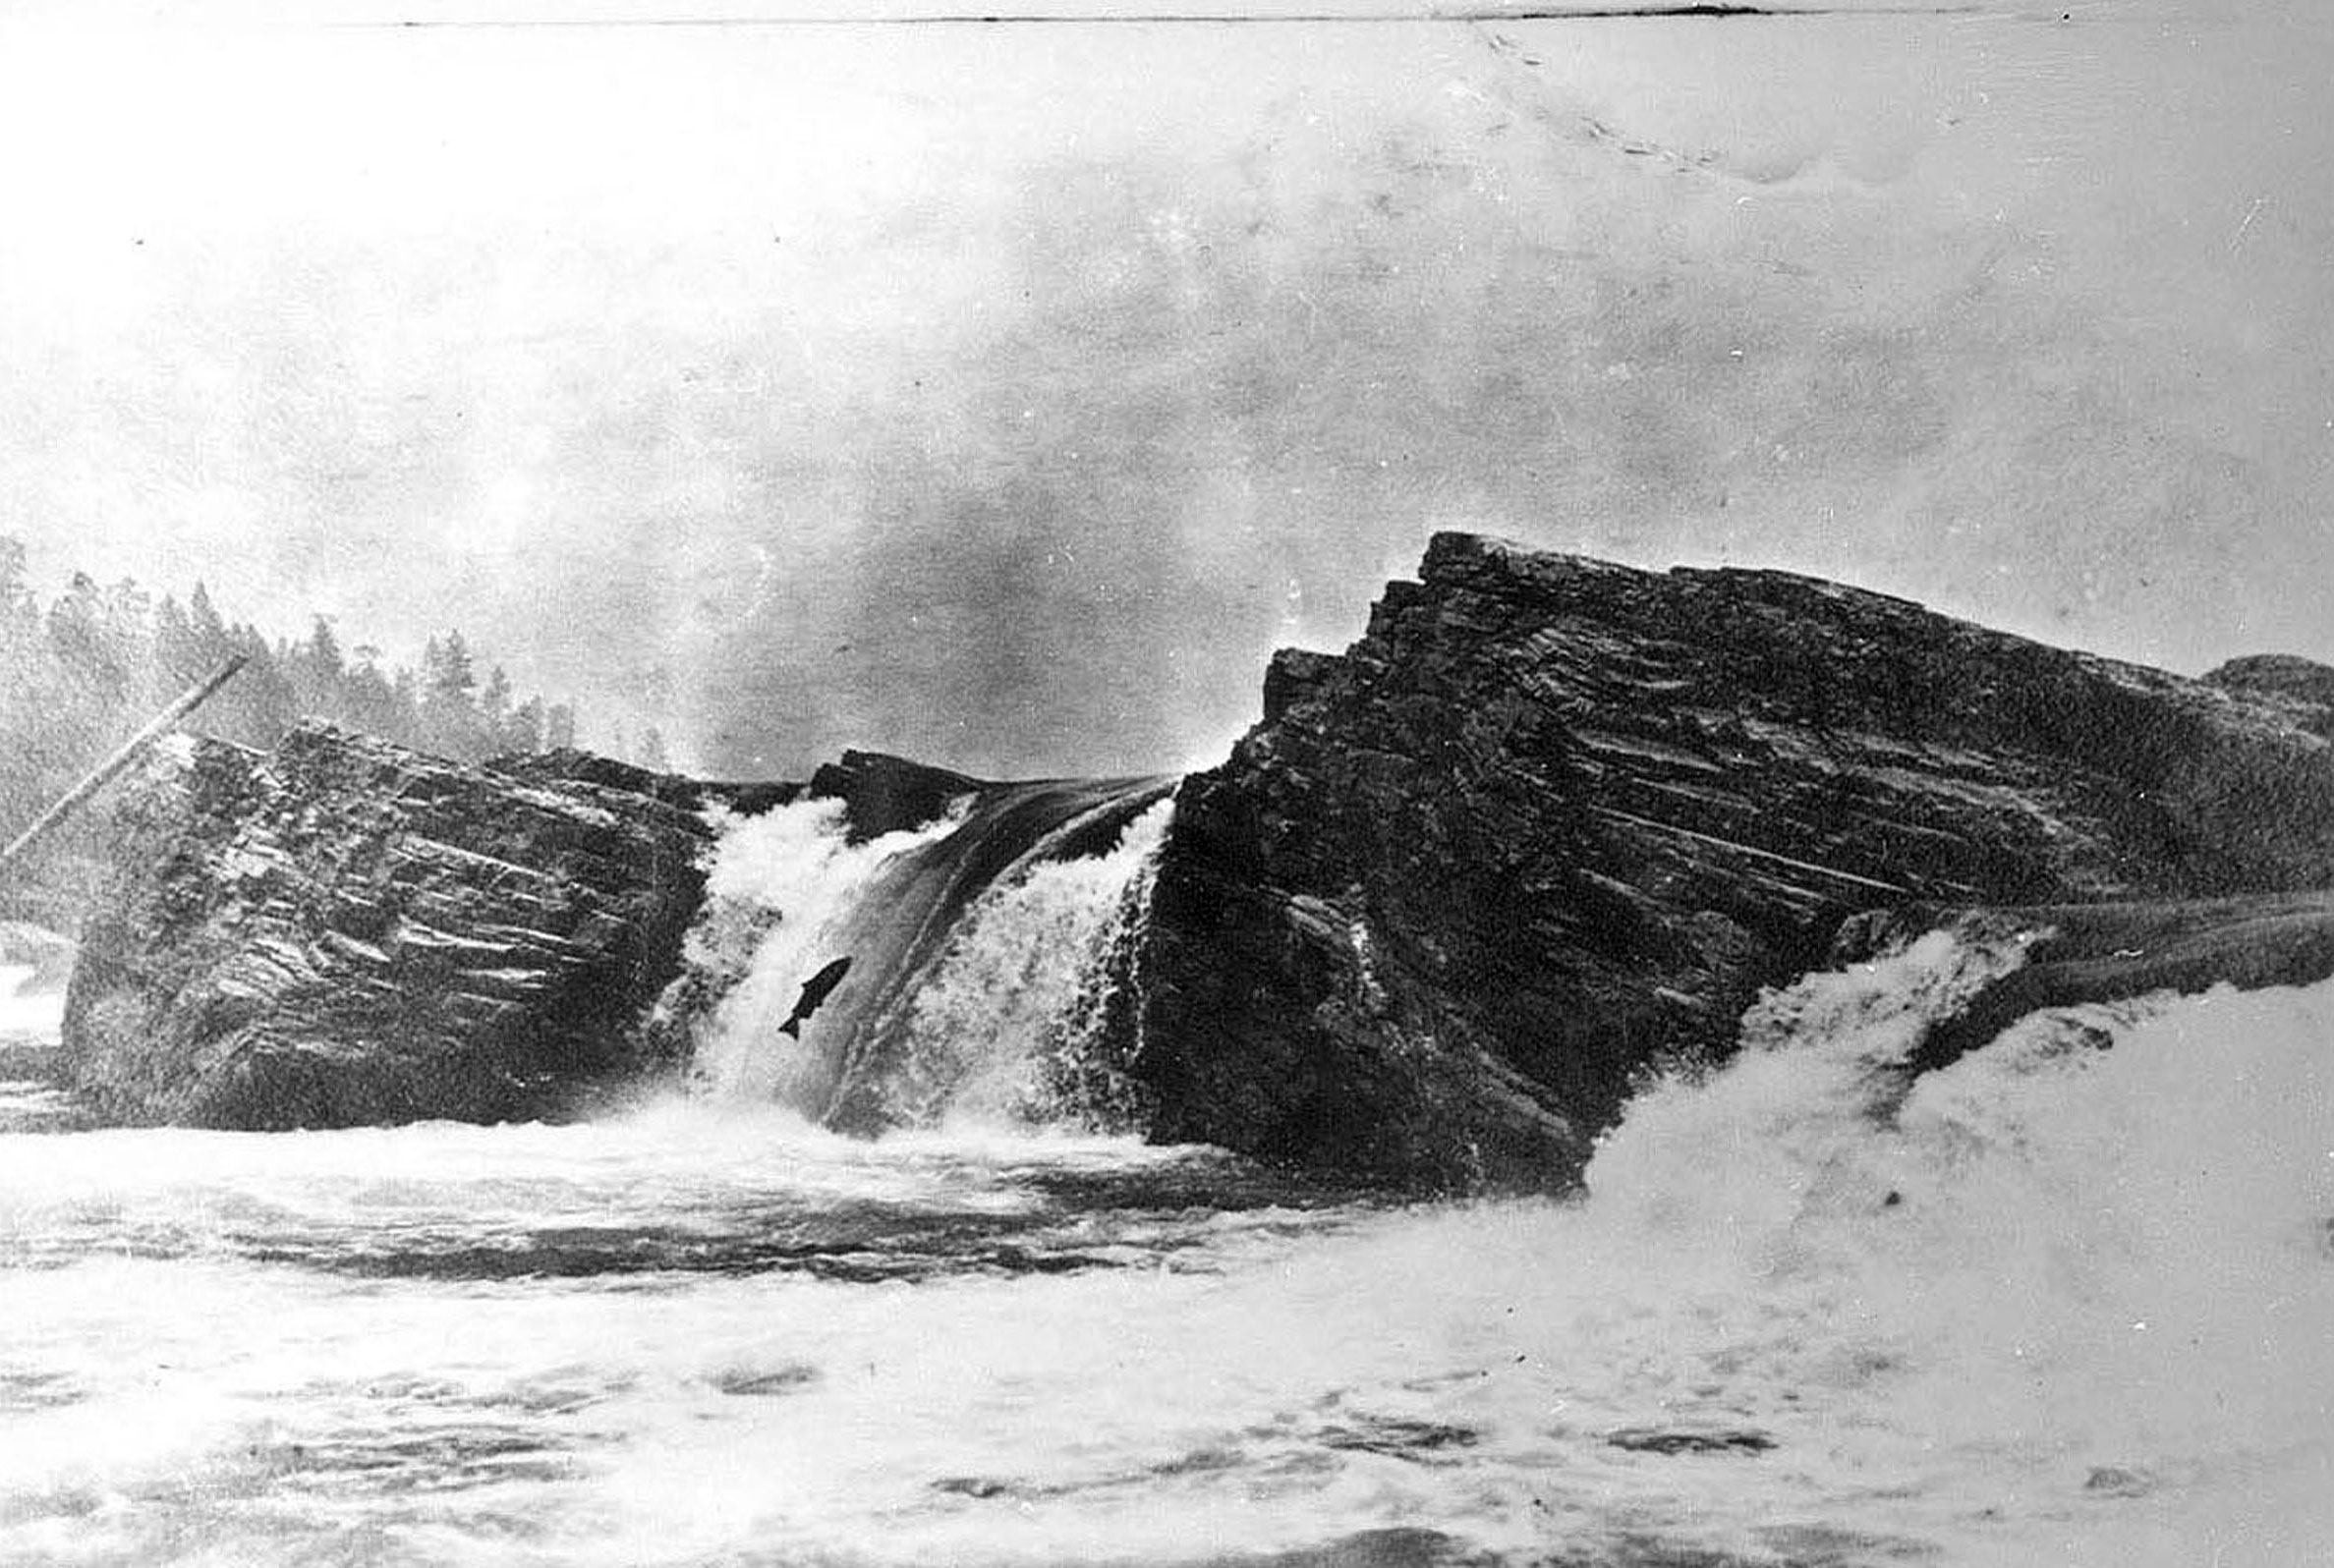 Photo taken Circa 1933. Salmon at Kettle Falls on the Columbia River.